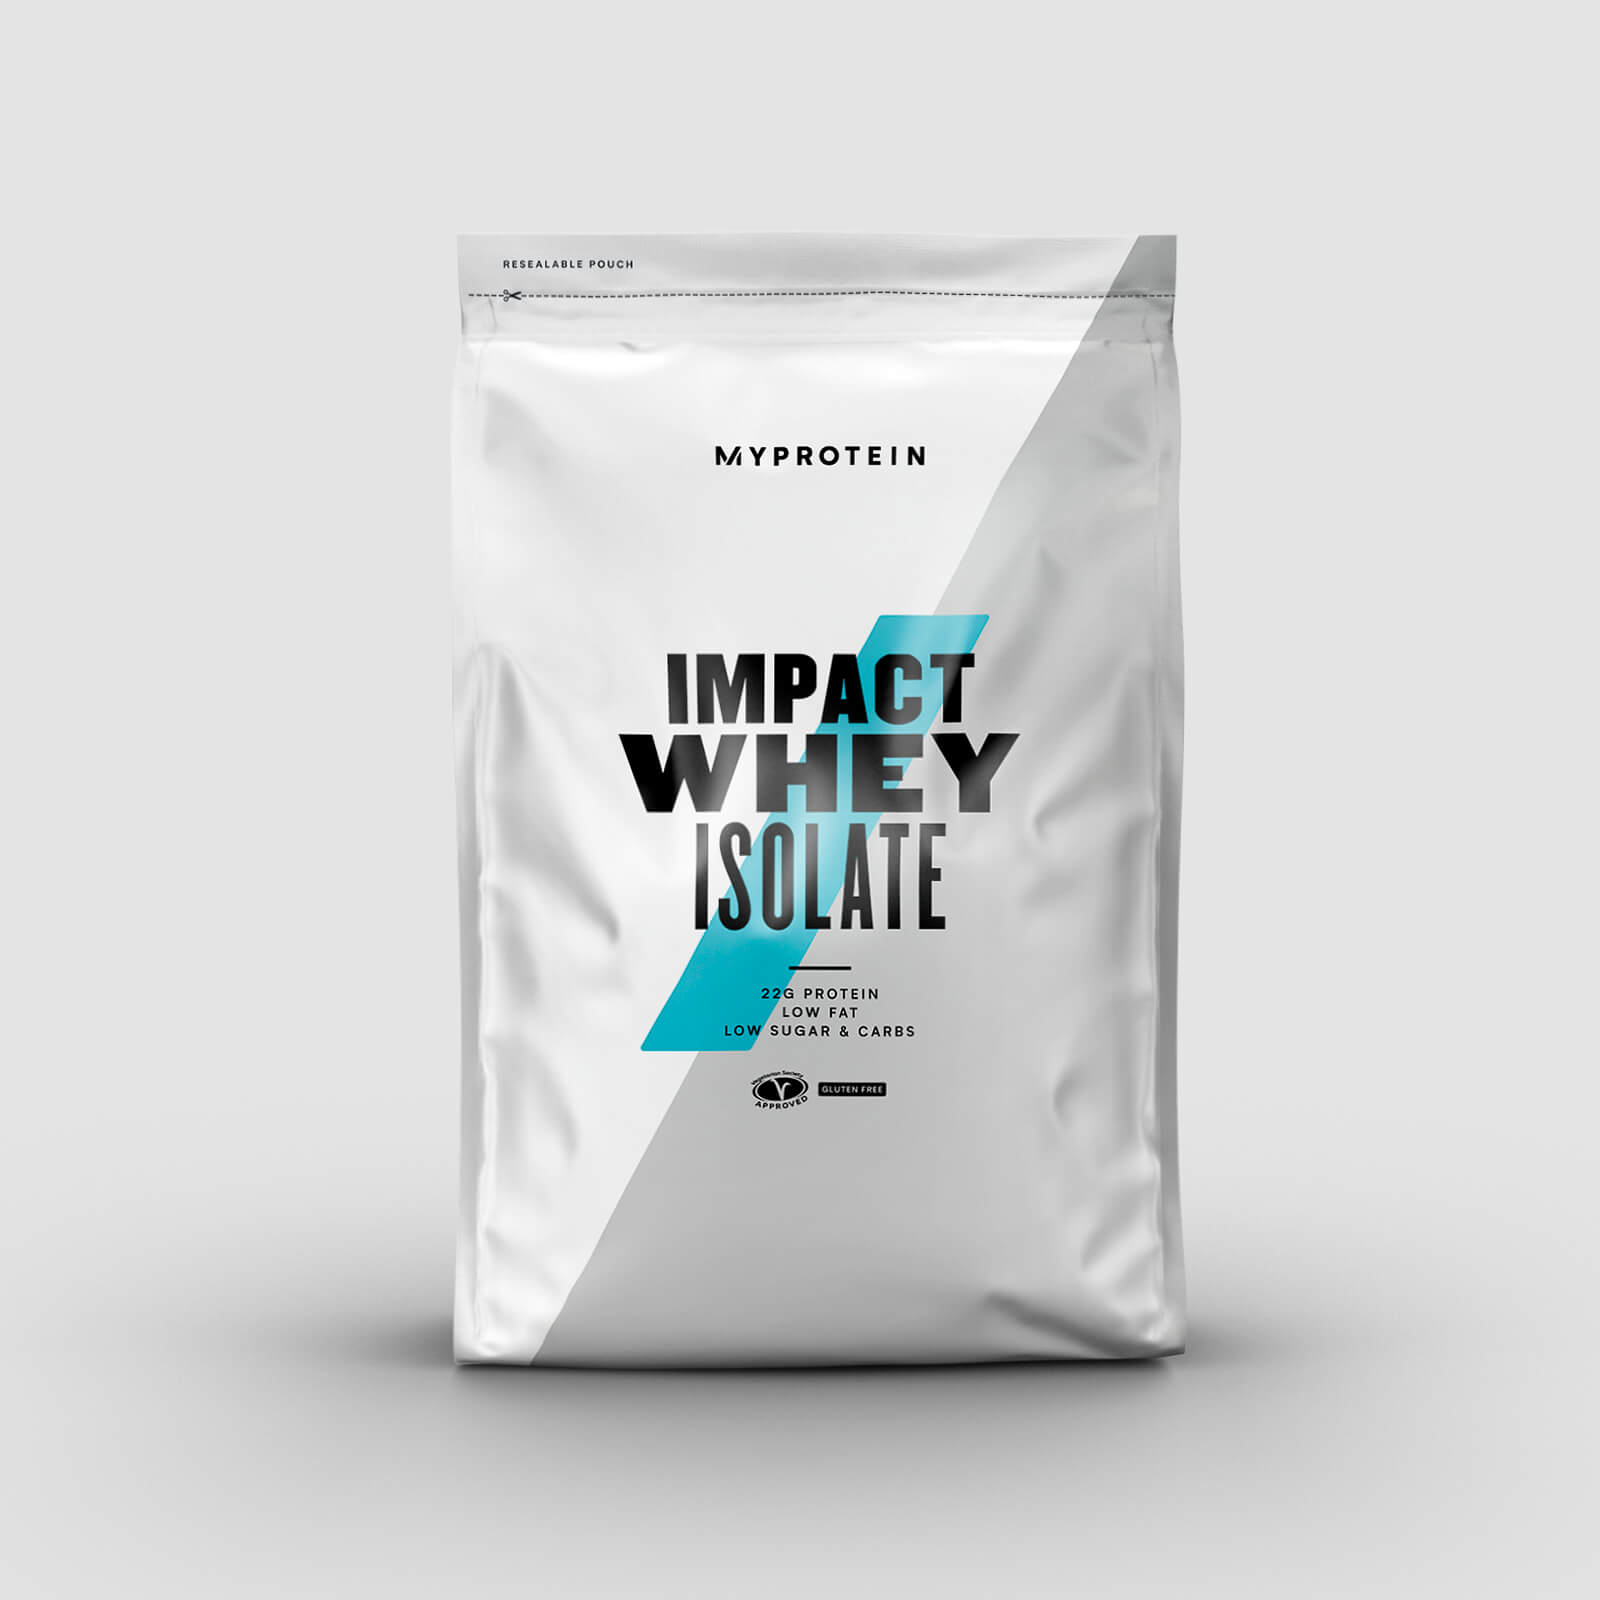 Impact Whey Isolate protein